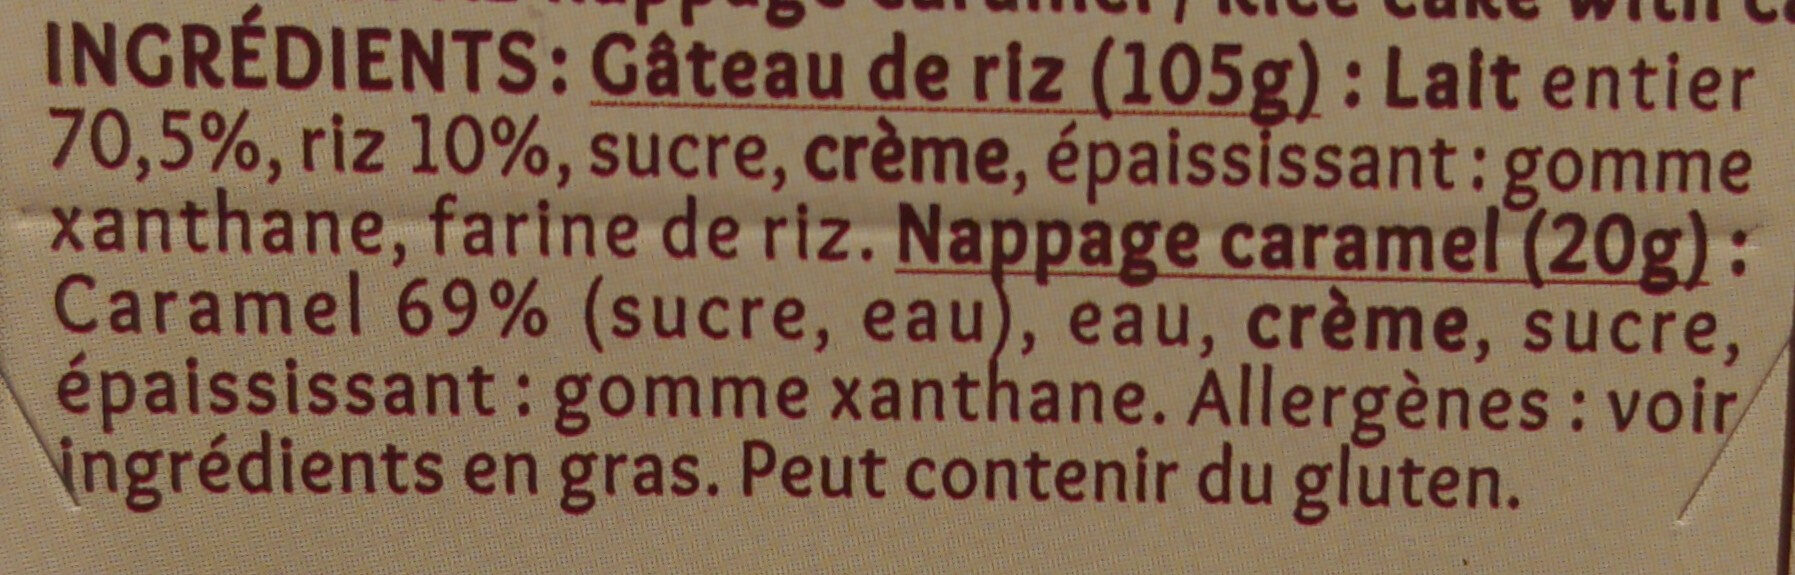 Gâteau de riz nappage caramel - المكونات - fr